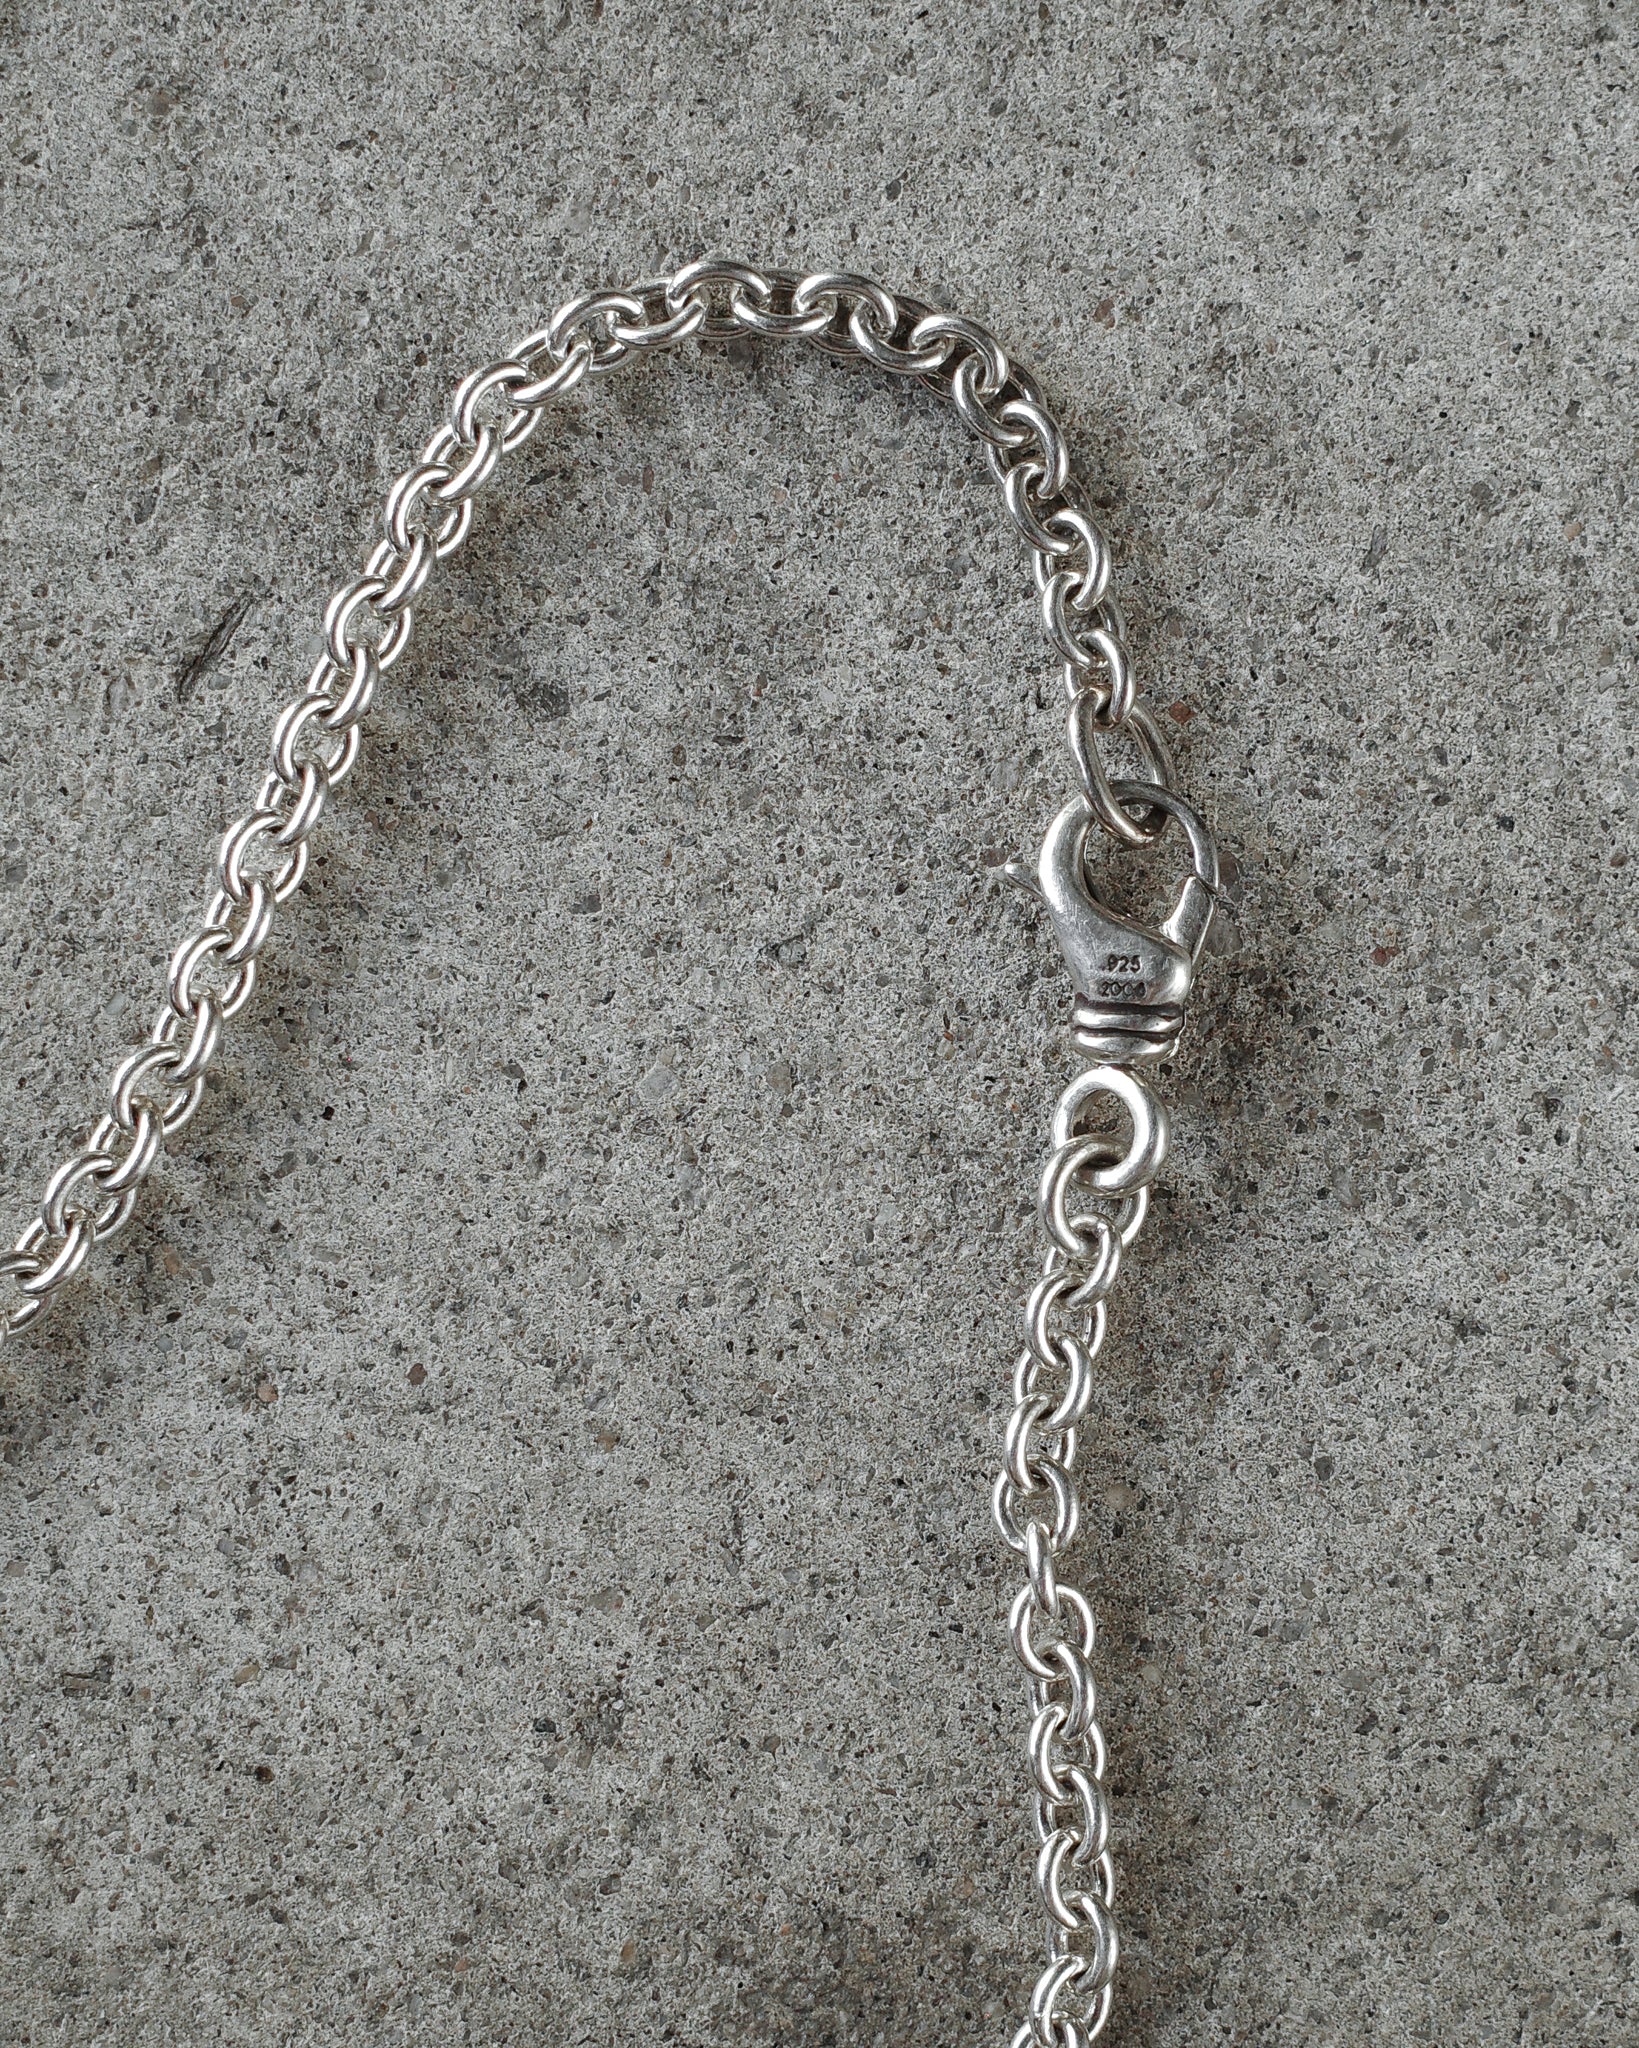 Chrome Hearts NE Chain Necklace